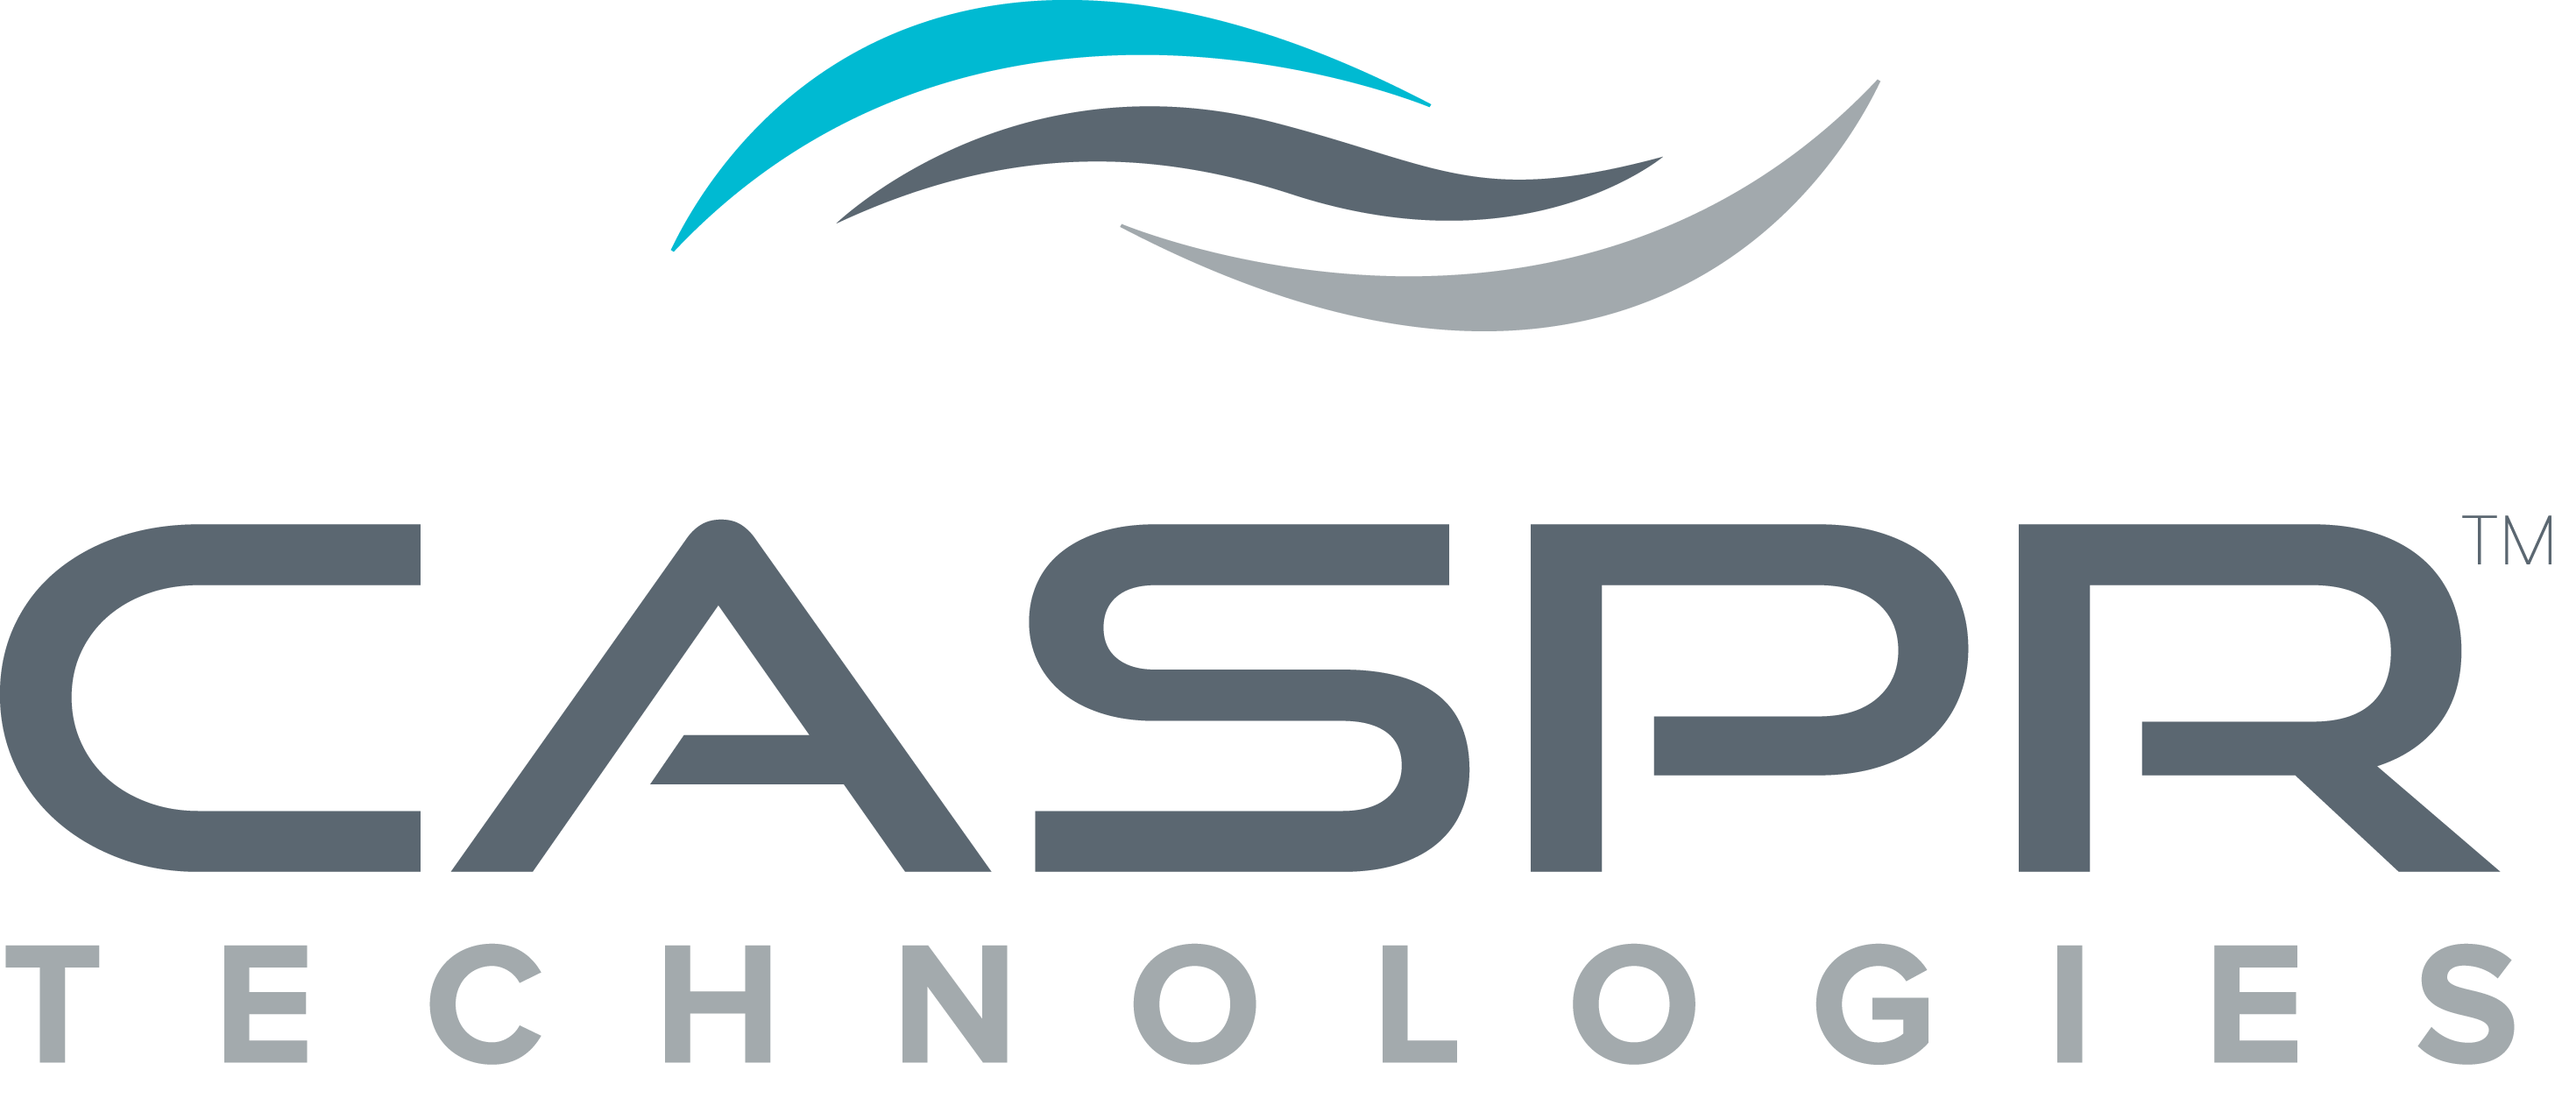 CASPR Technologies Logo